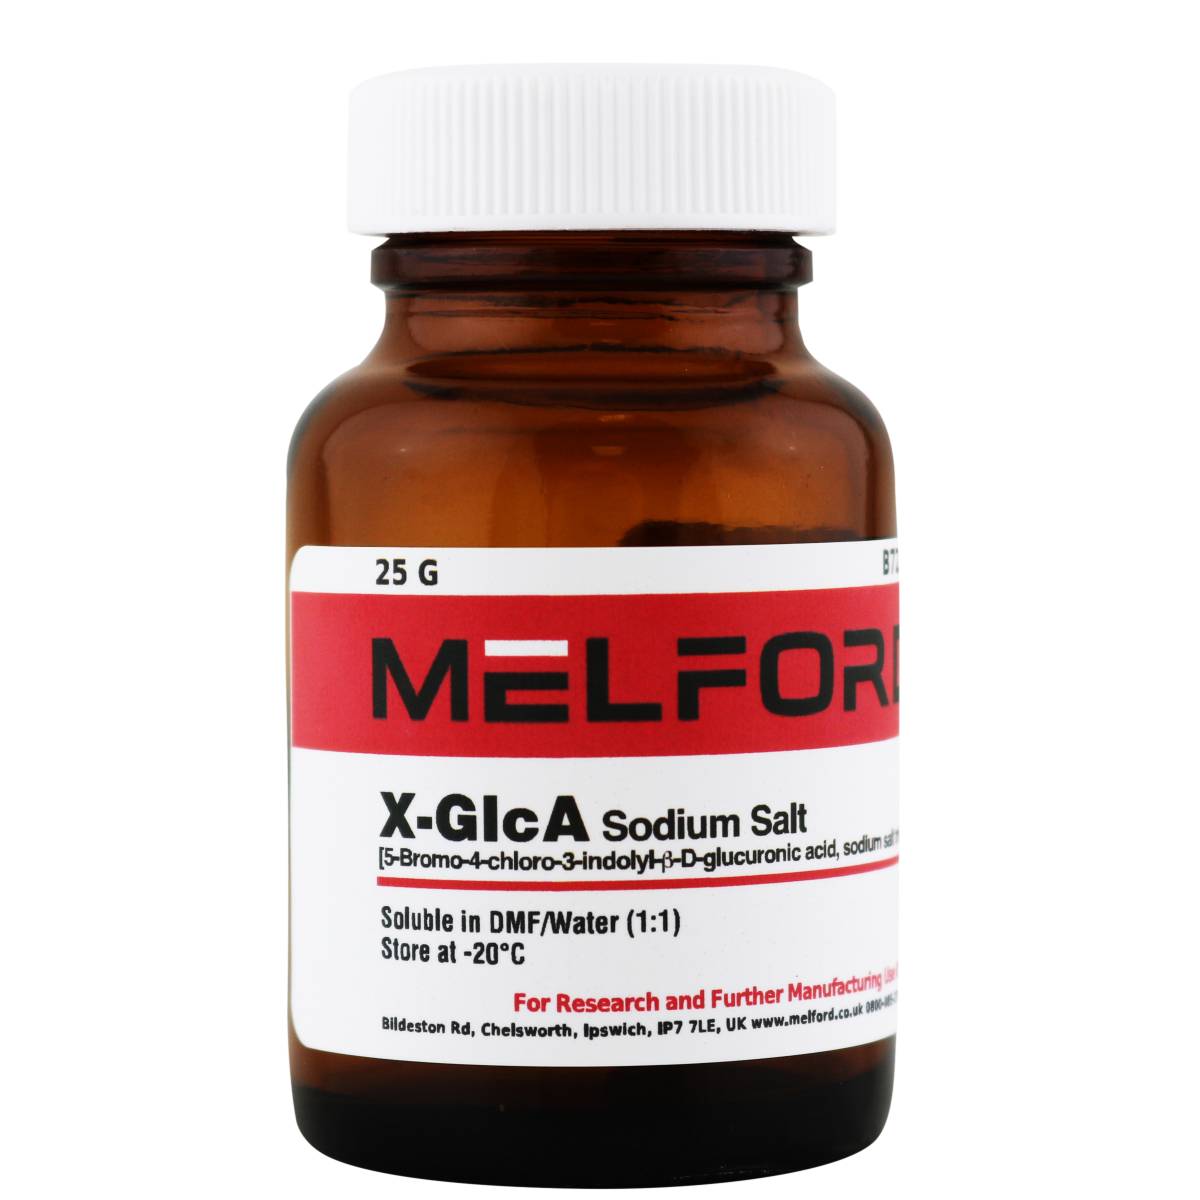 X-GlcA Sodium Salt [5-Bromo-4-chloro-3-indolyl-β-D-glucuronic acid, sodium salt trihydrate], 25 Gram